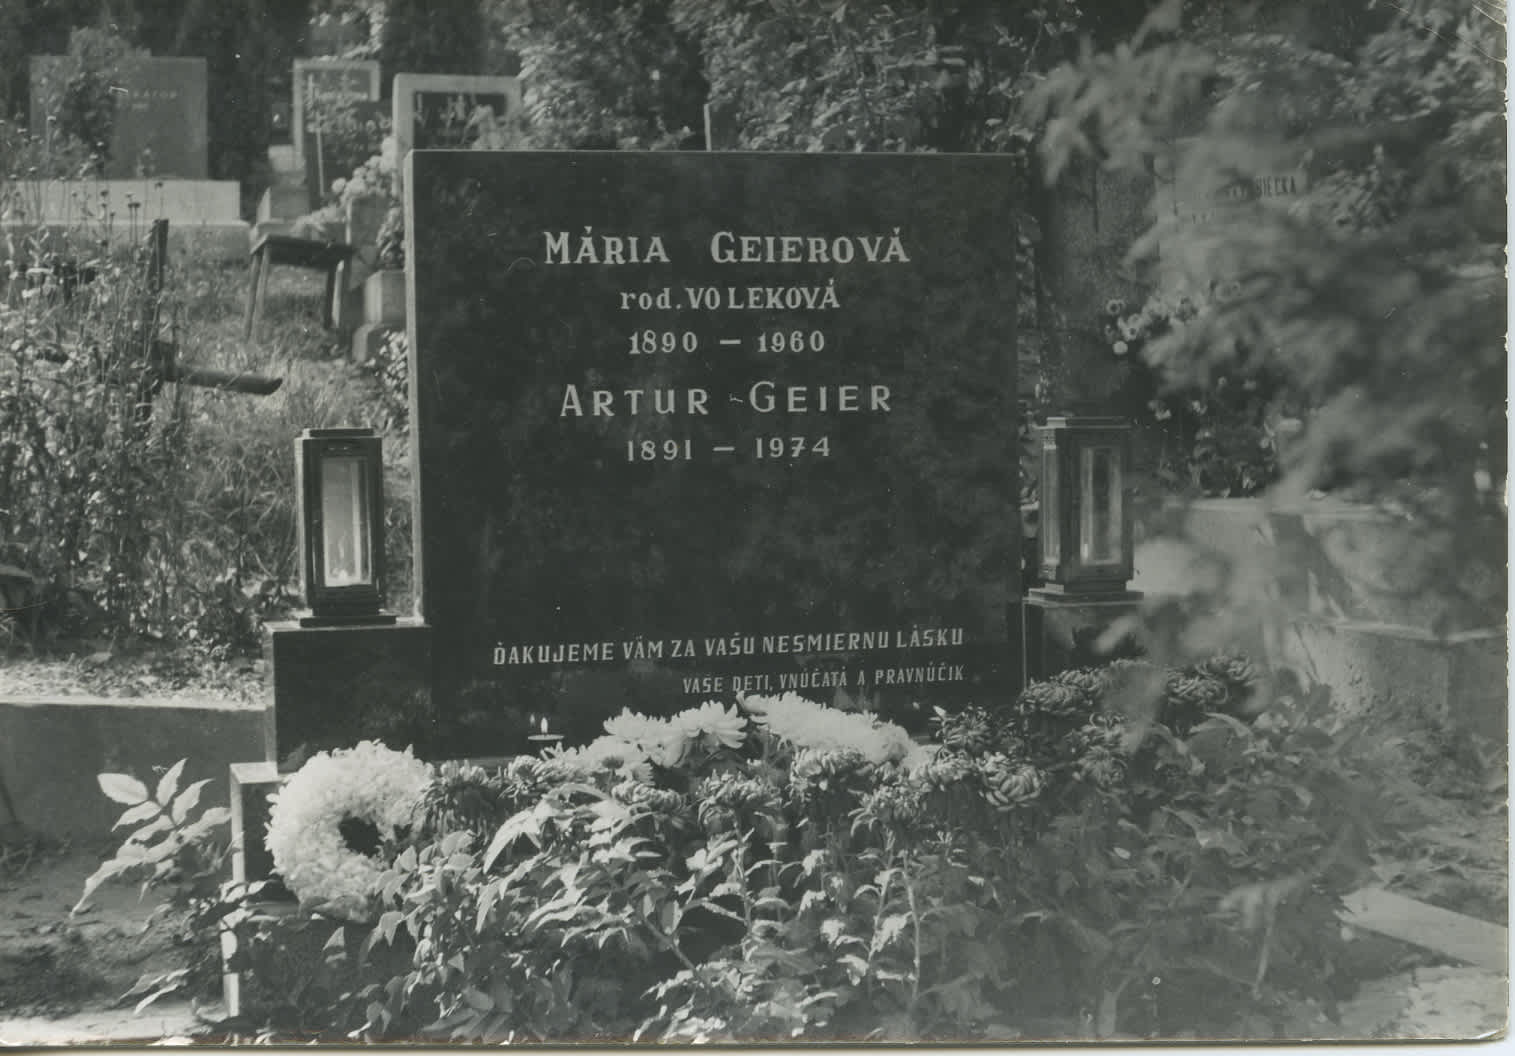 The grave of Maria Geierova, 1960